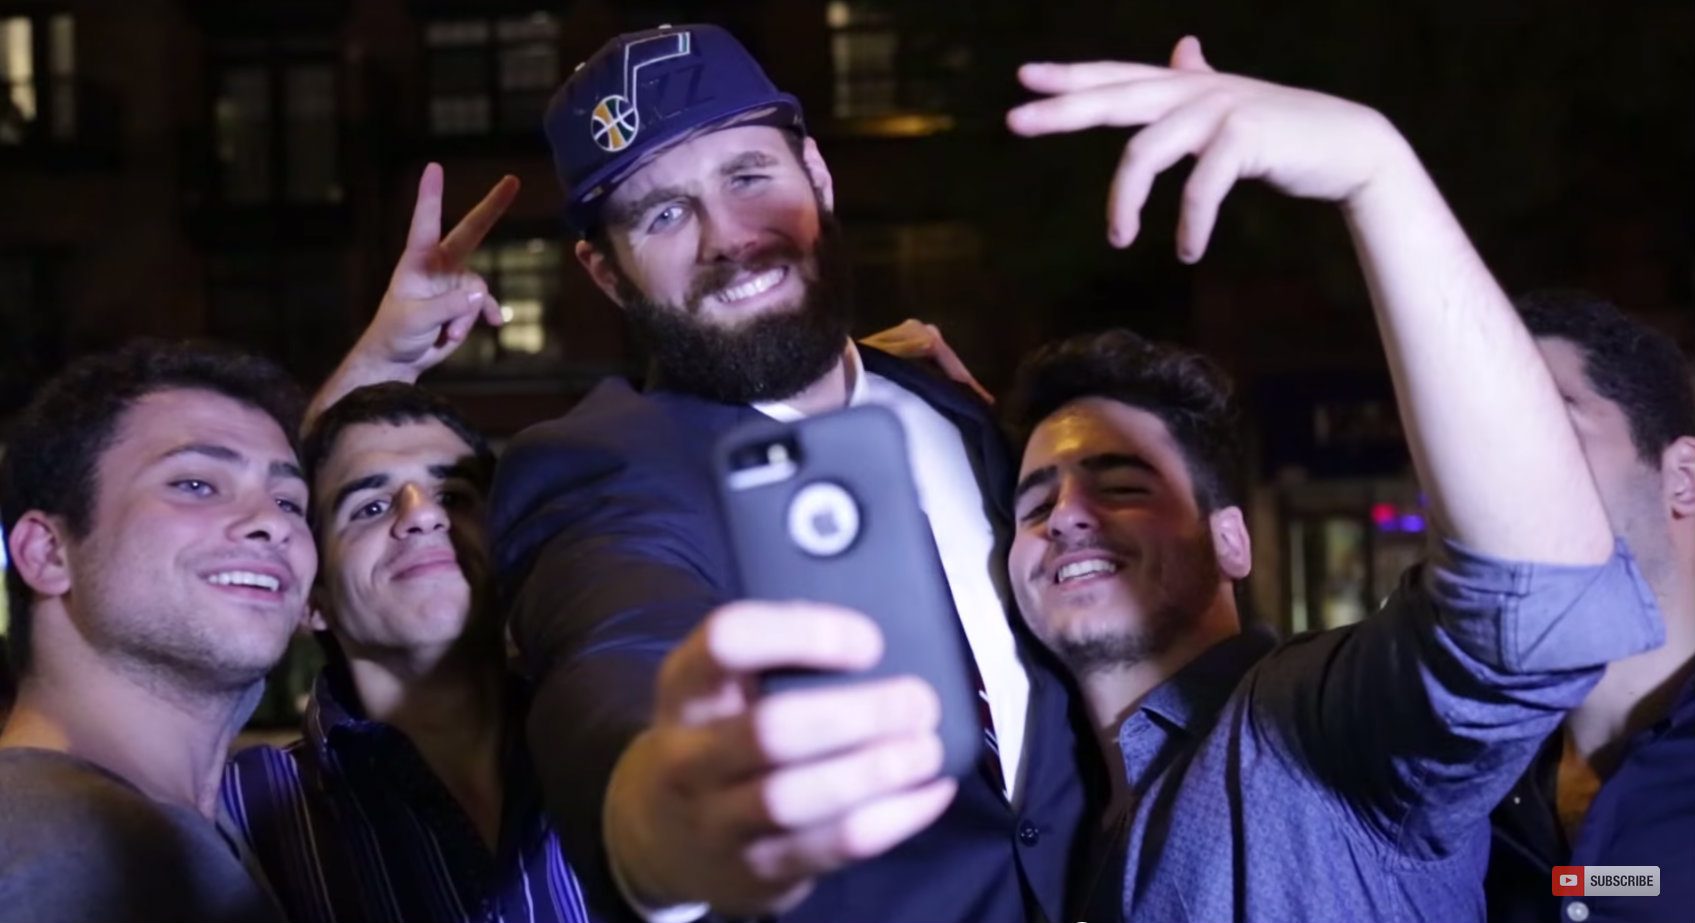 WATCH: Guy pretends to be NBA Draft pick, enjoys NYC night life